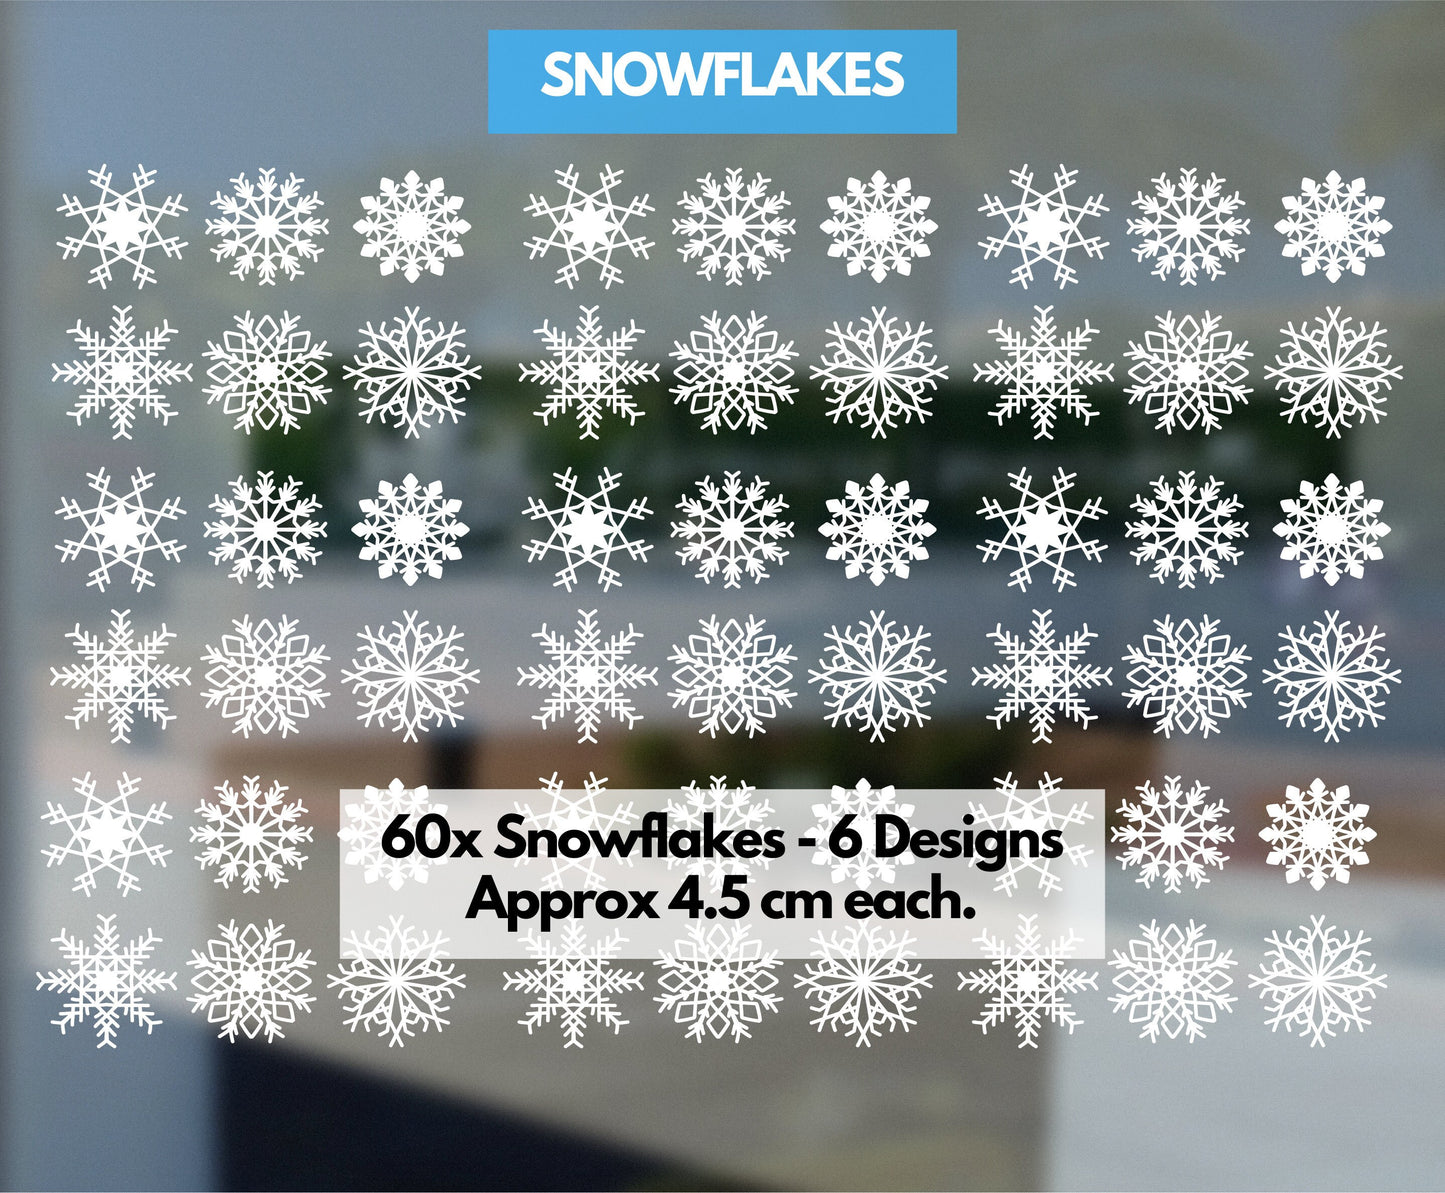 Shop Window Christmas Snowflake Window Stickers, Shop Display Christmas Decals, Snowflake Stickers For Shops